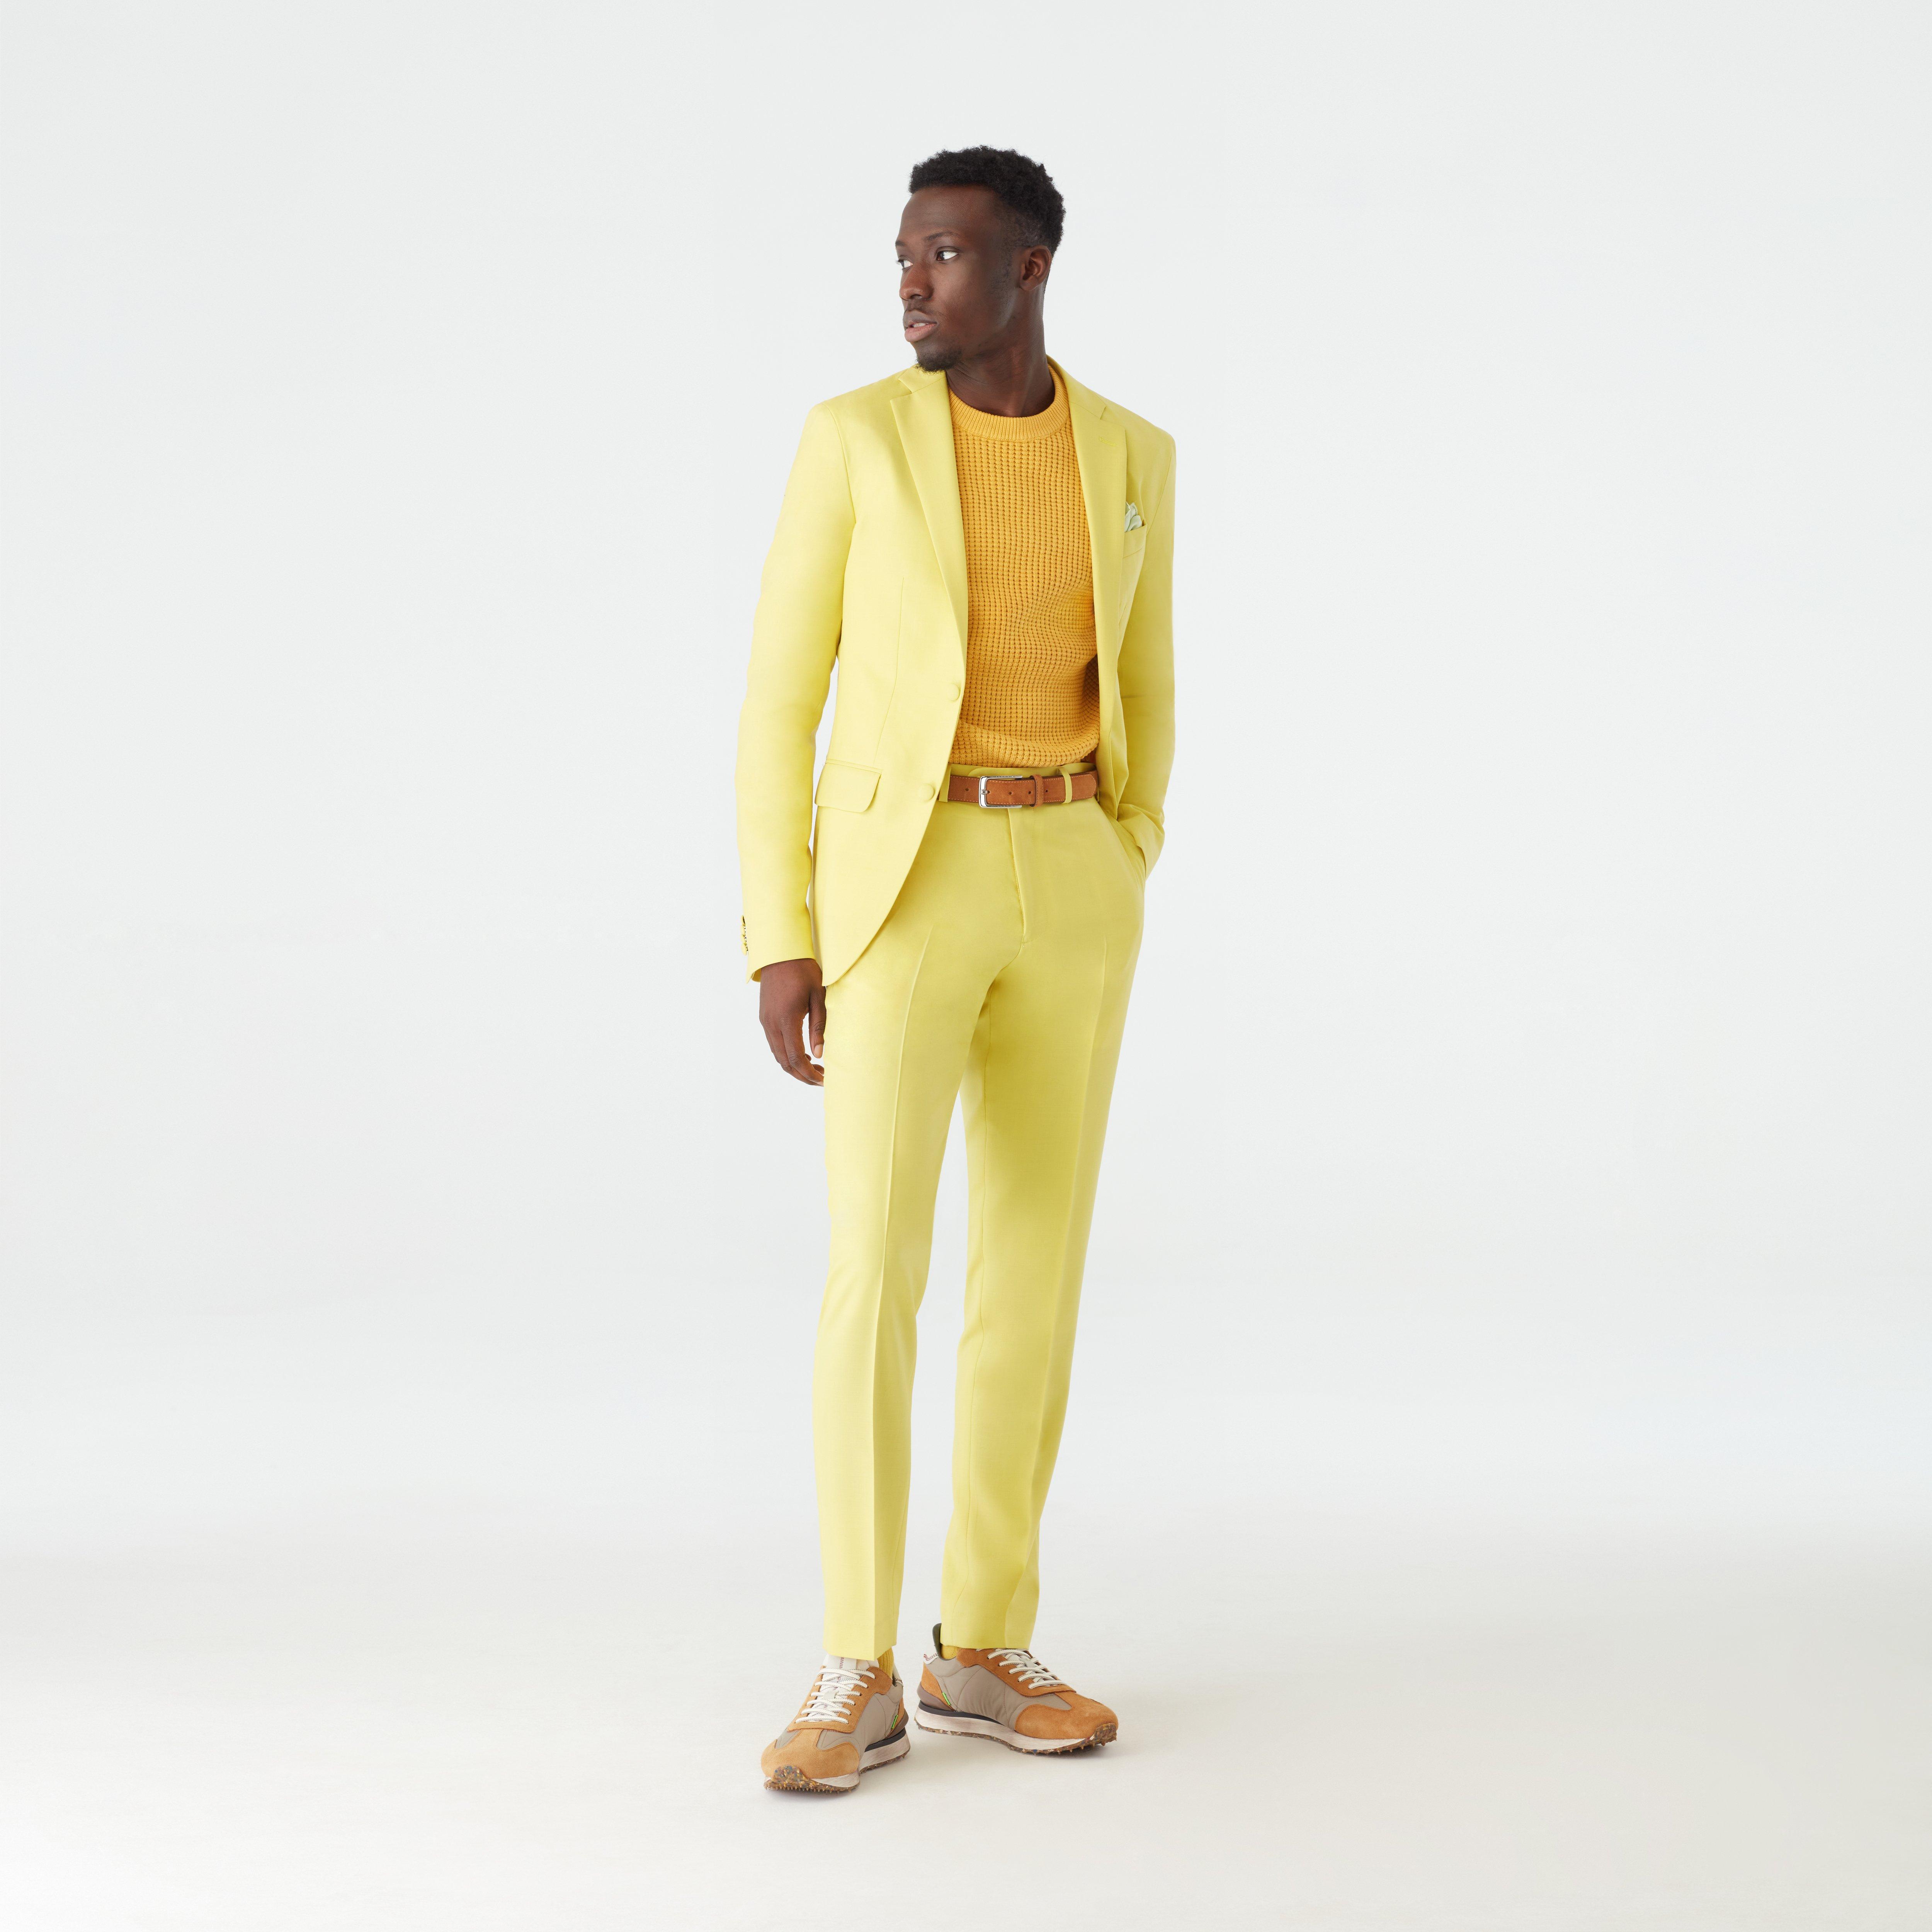 Suitmeister Men's Solid Yellow Color Suit - Walmart.com